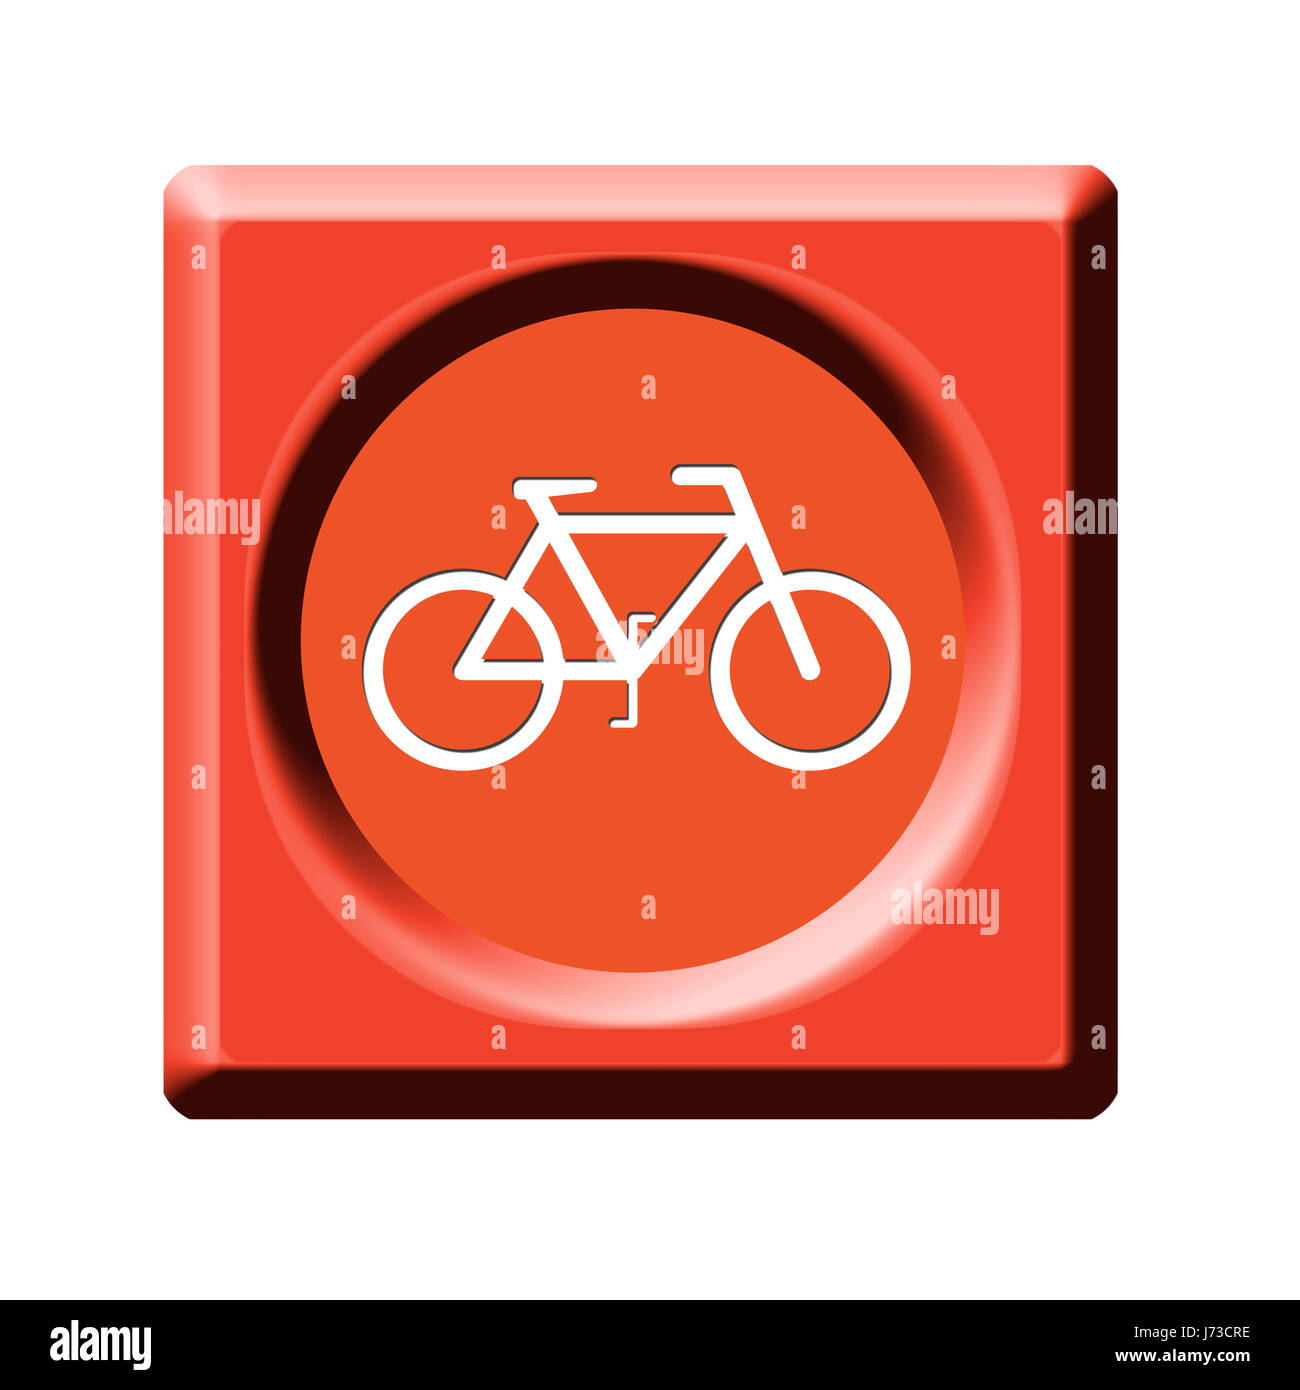 bike button Stock Photo